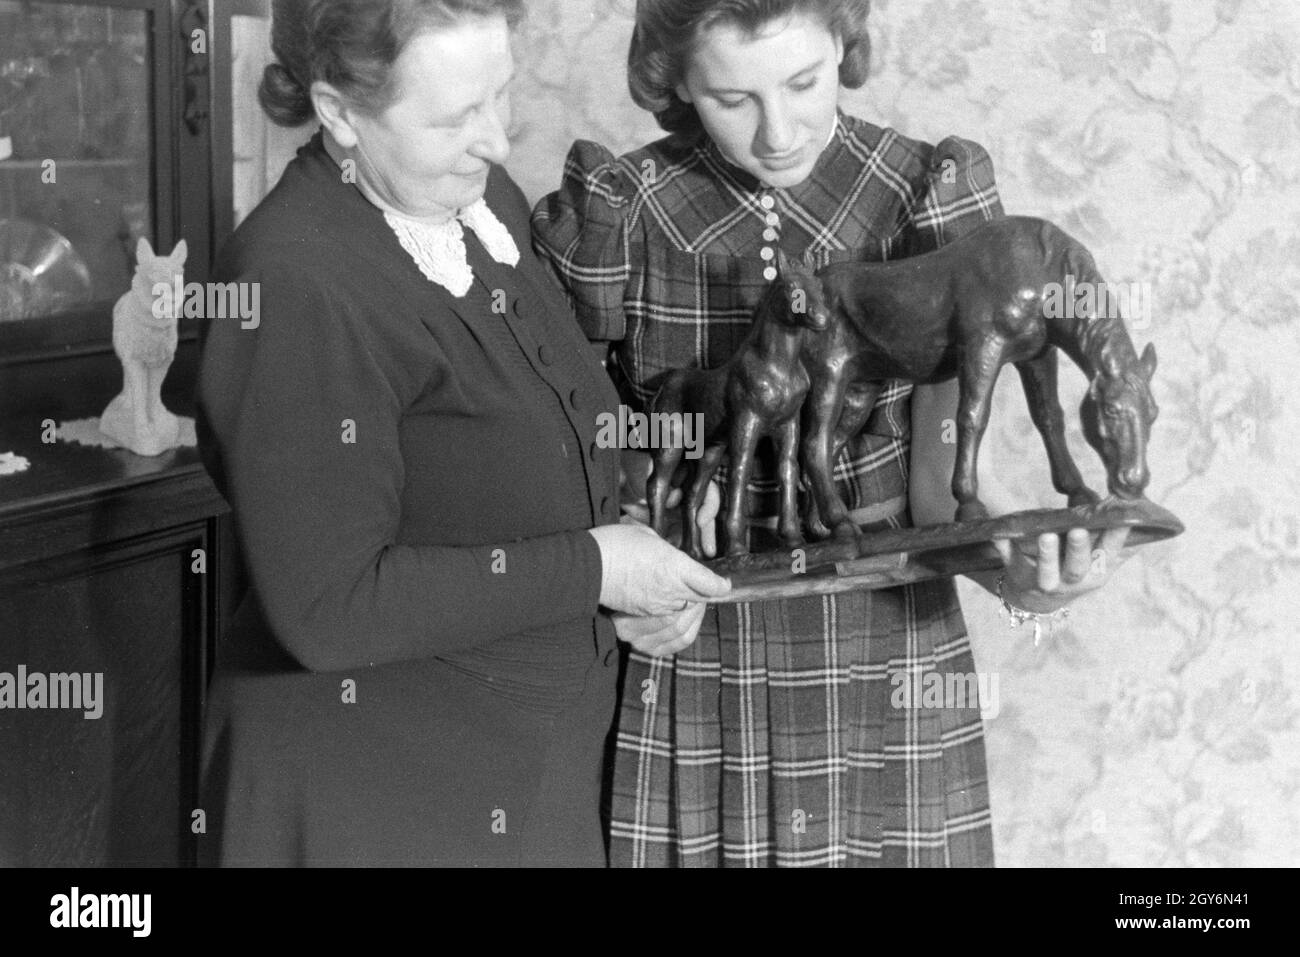 Die Weltmeisterin Anni Kapell bei ihrer Familie, Deutsches Reich 1941. Campione del Mondo Anni Kapell presso la sua famiglia, Germania 1941 Foto Stock